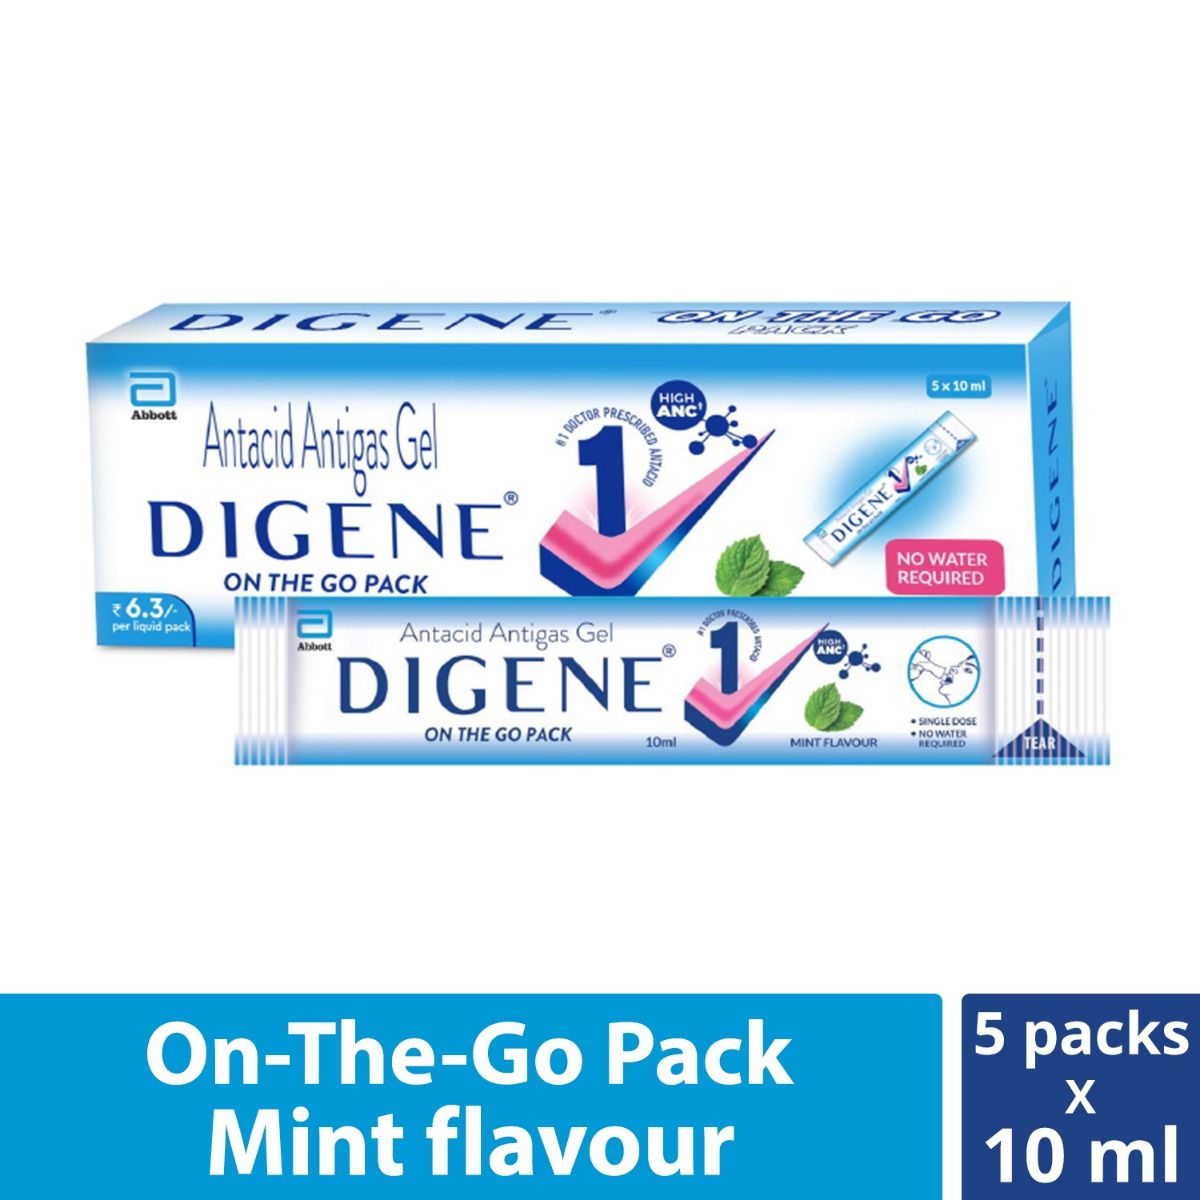 Digene On The Go Pack Mint Flavour Antacid Antigas Gel, 2x5 packs, Pack of 2 GELS